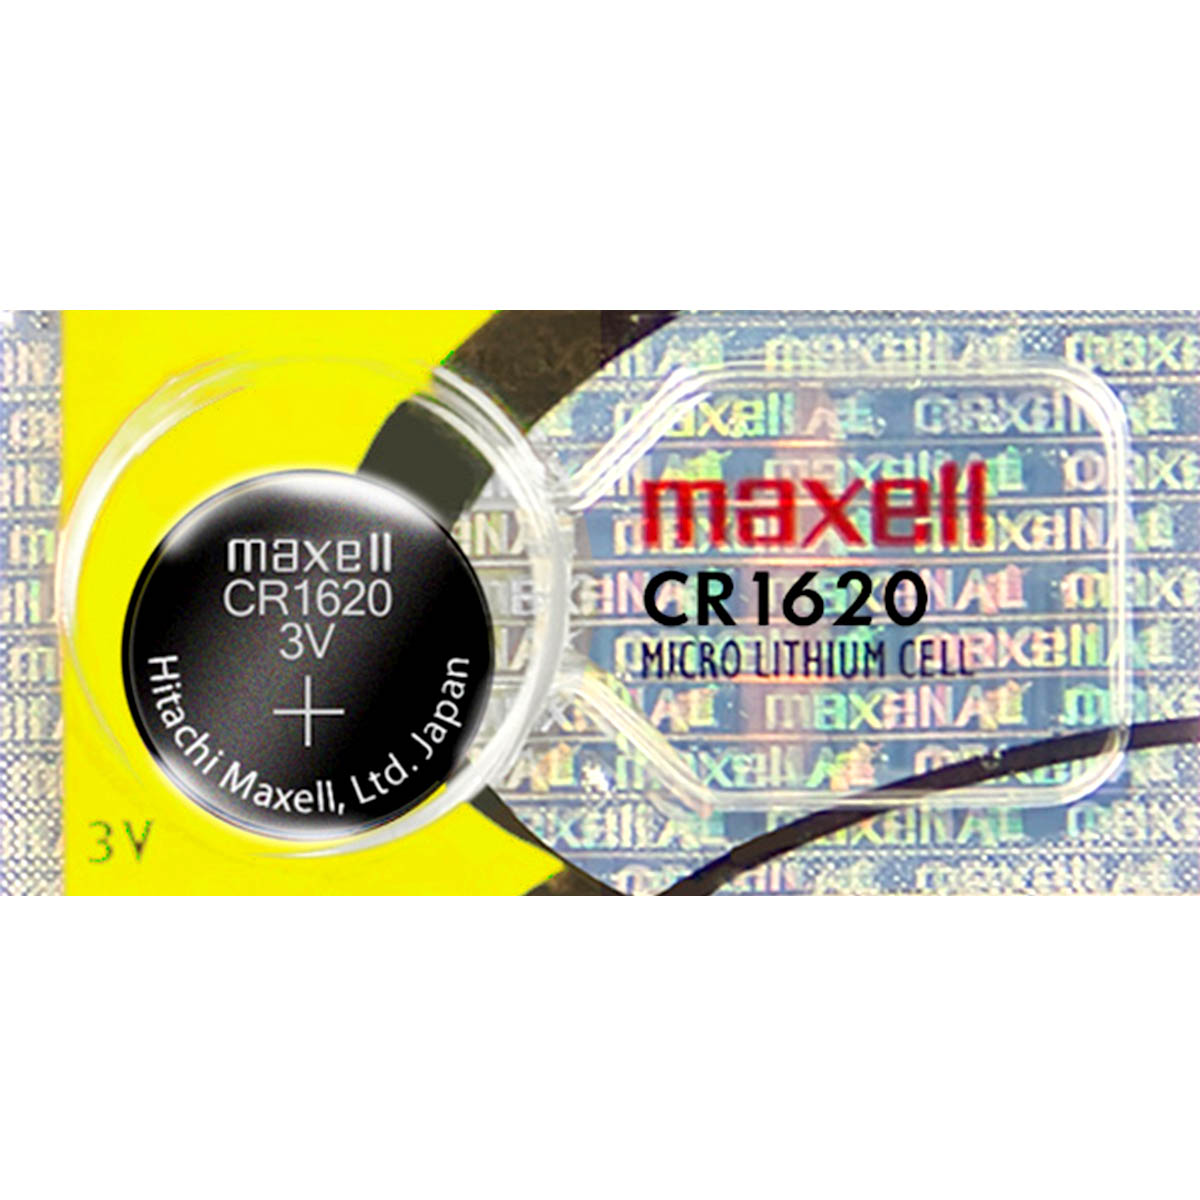 Maxell CR1620 Battery